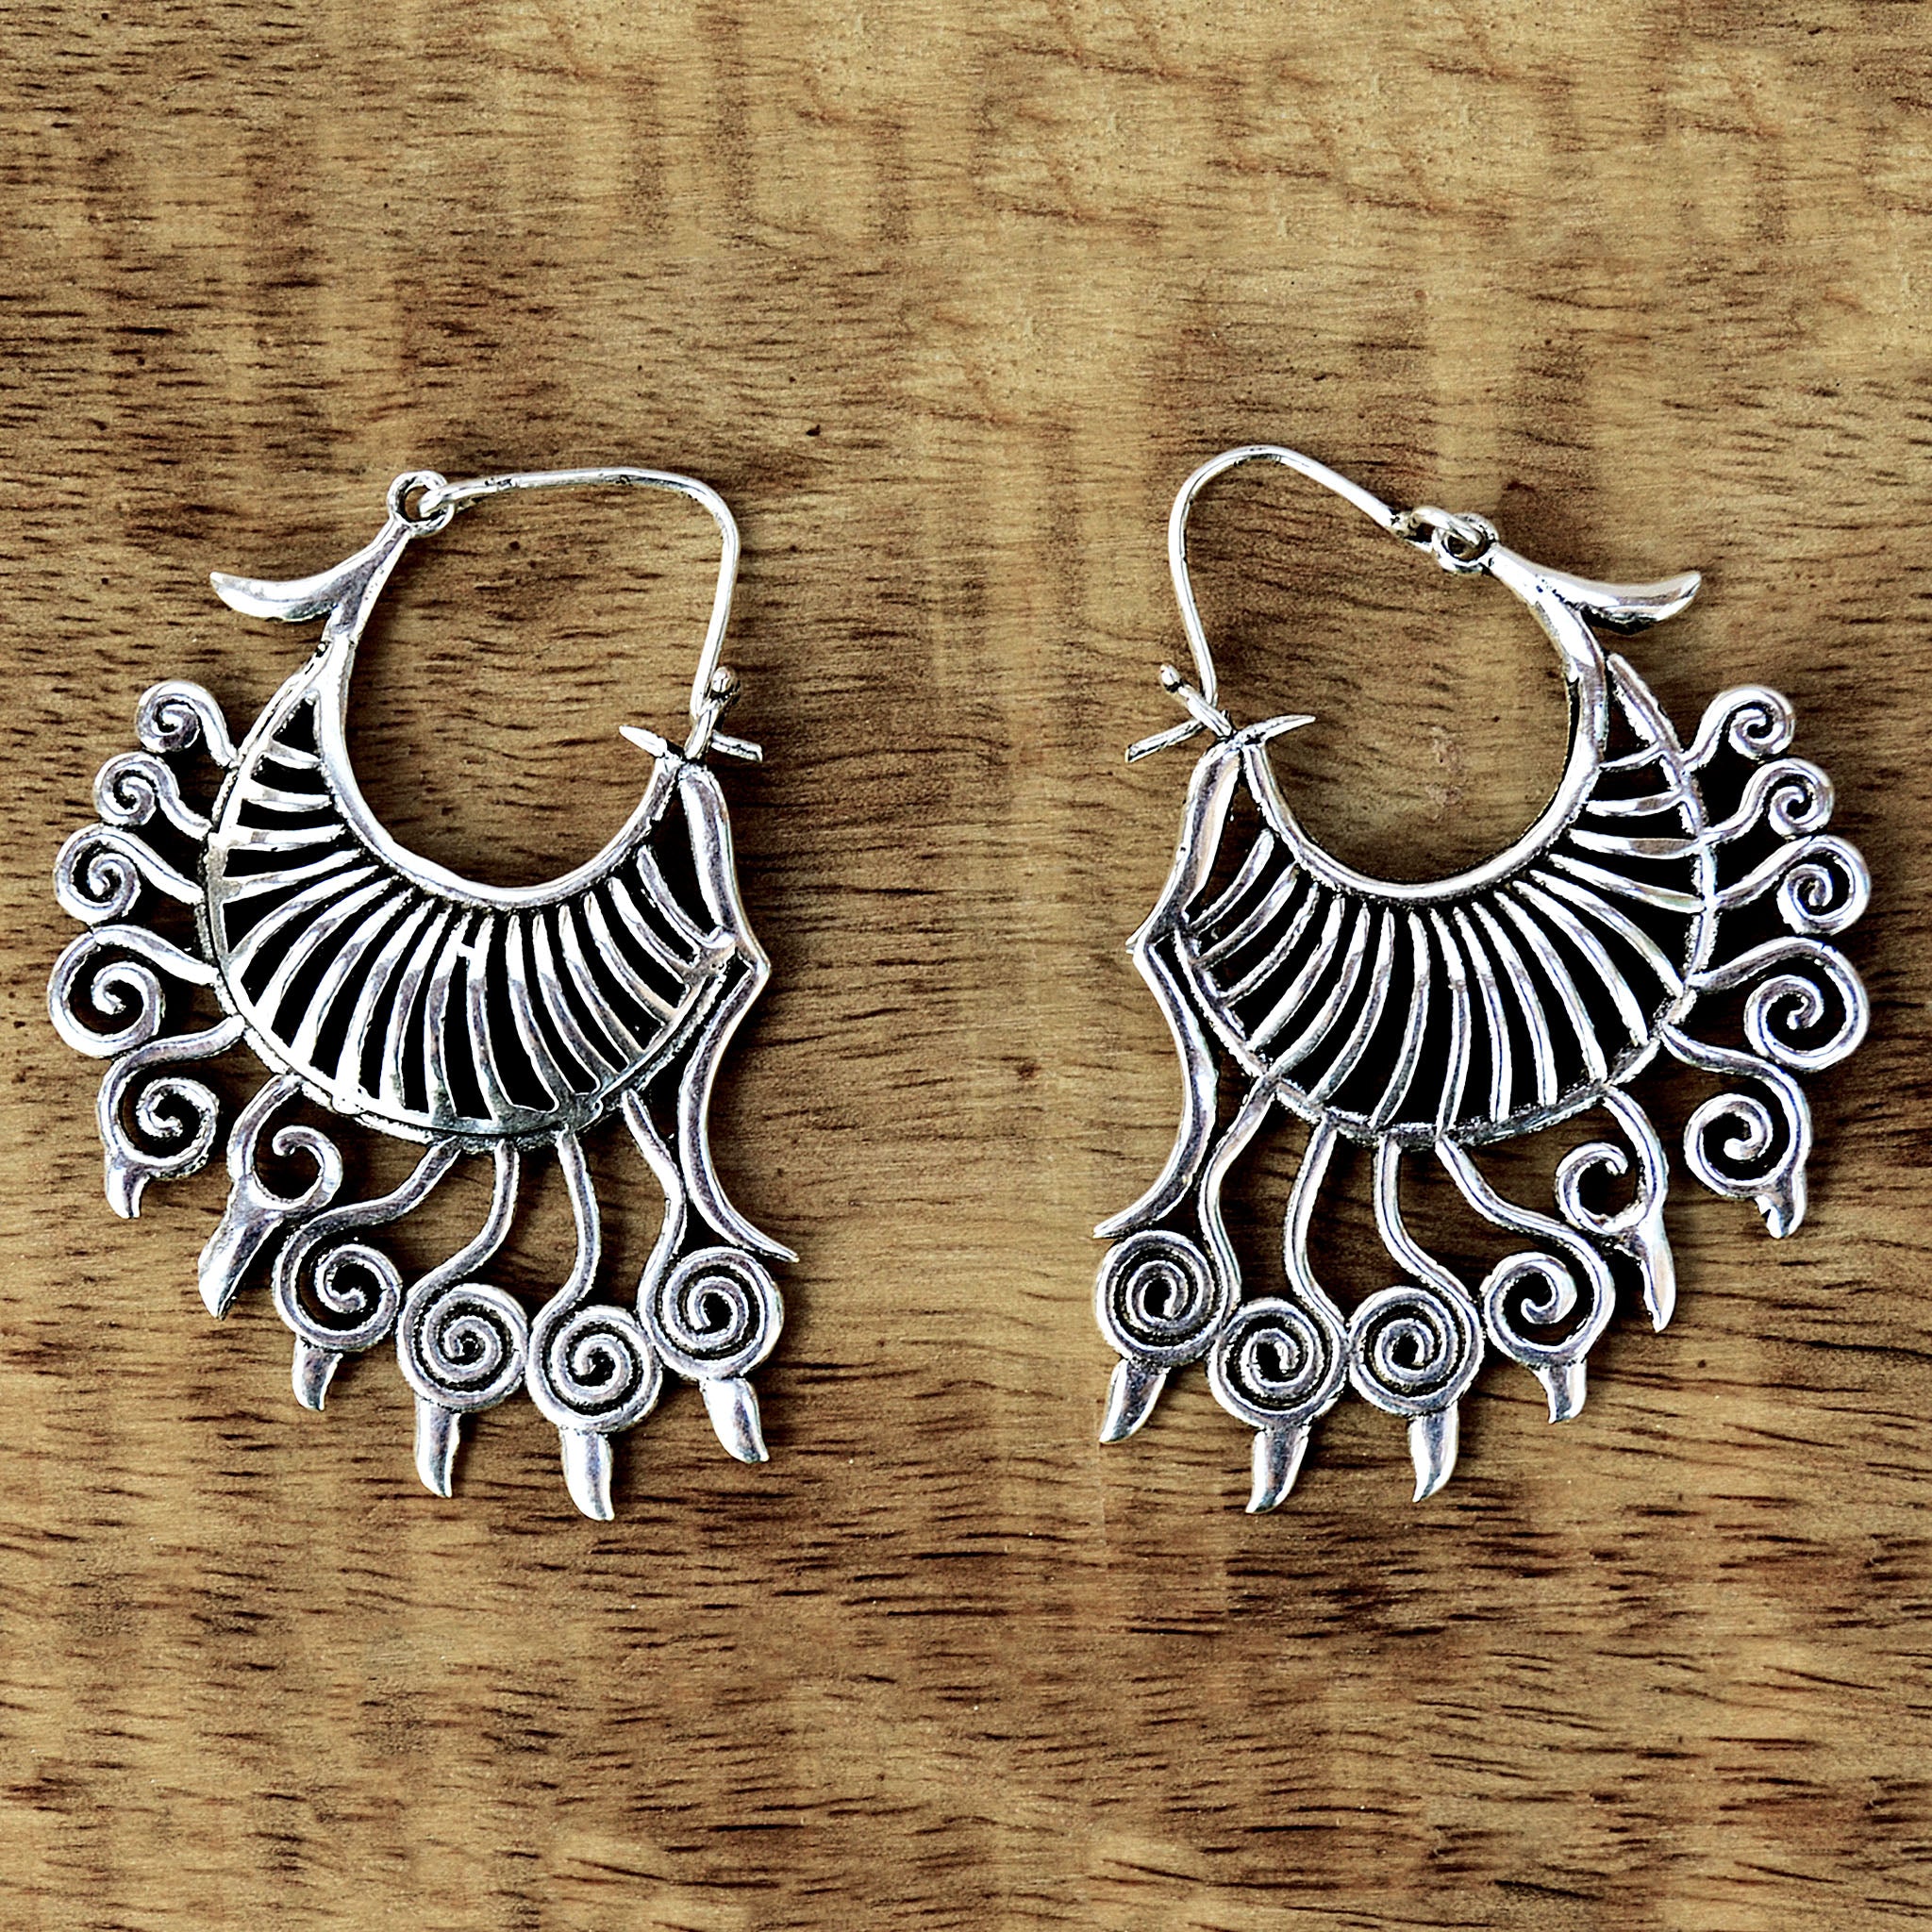 Tribal earrings